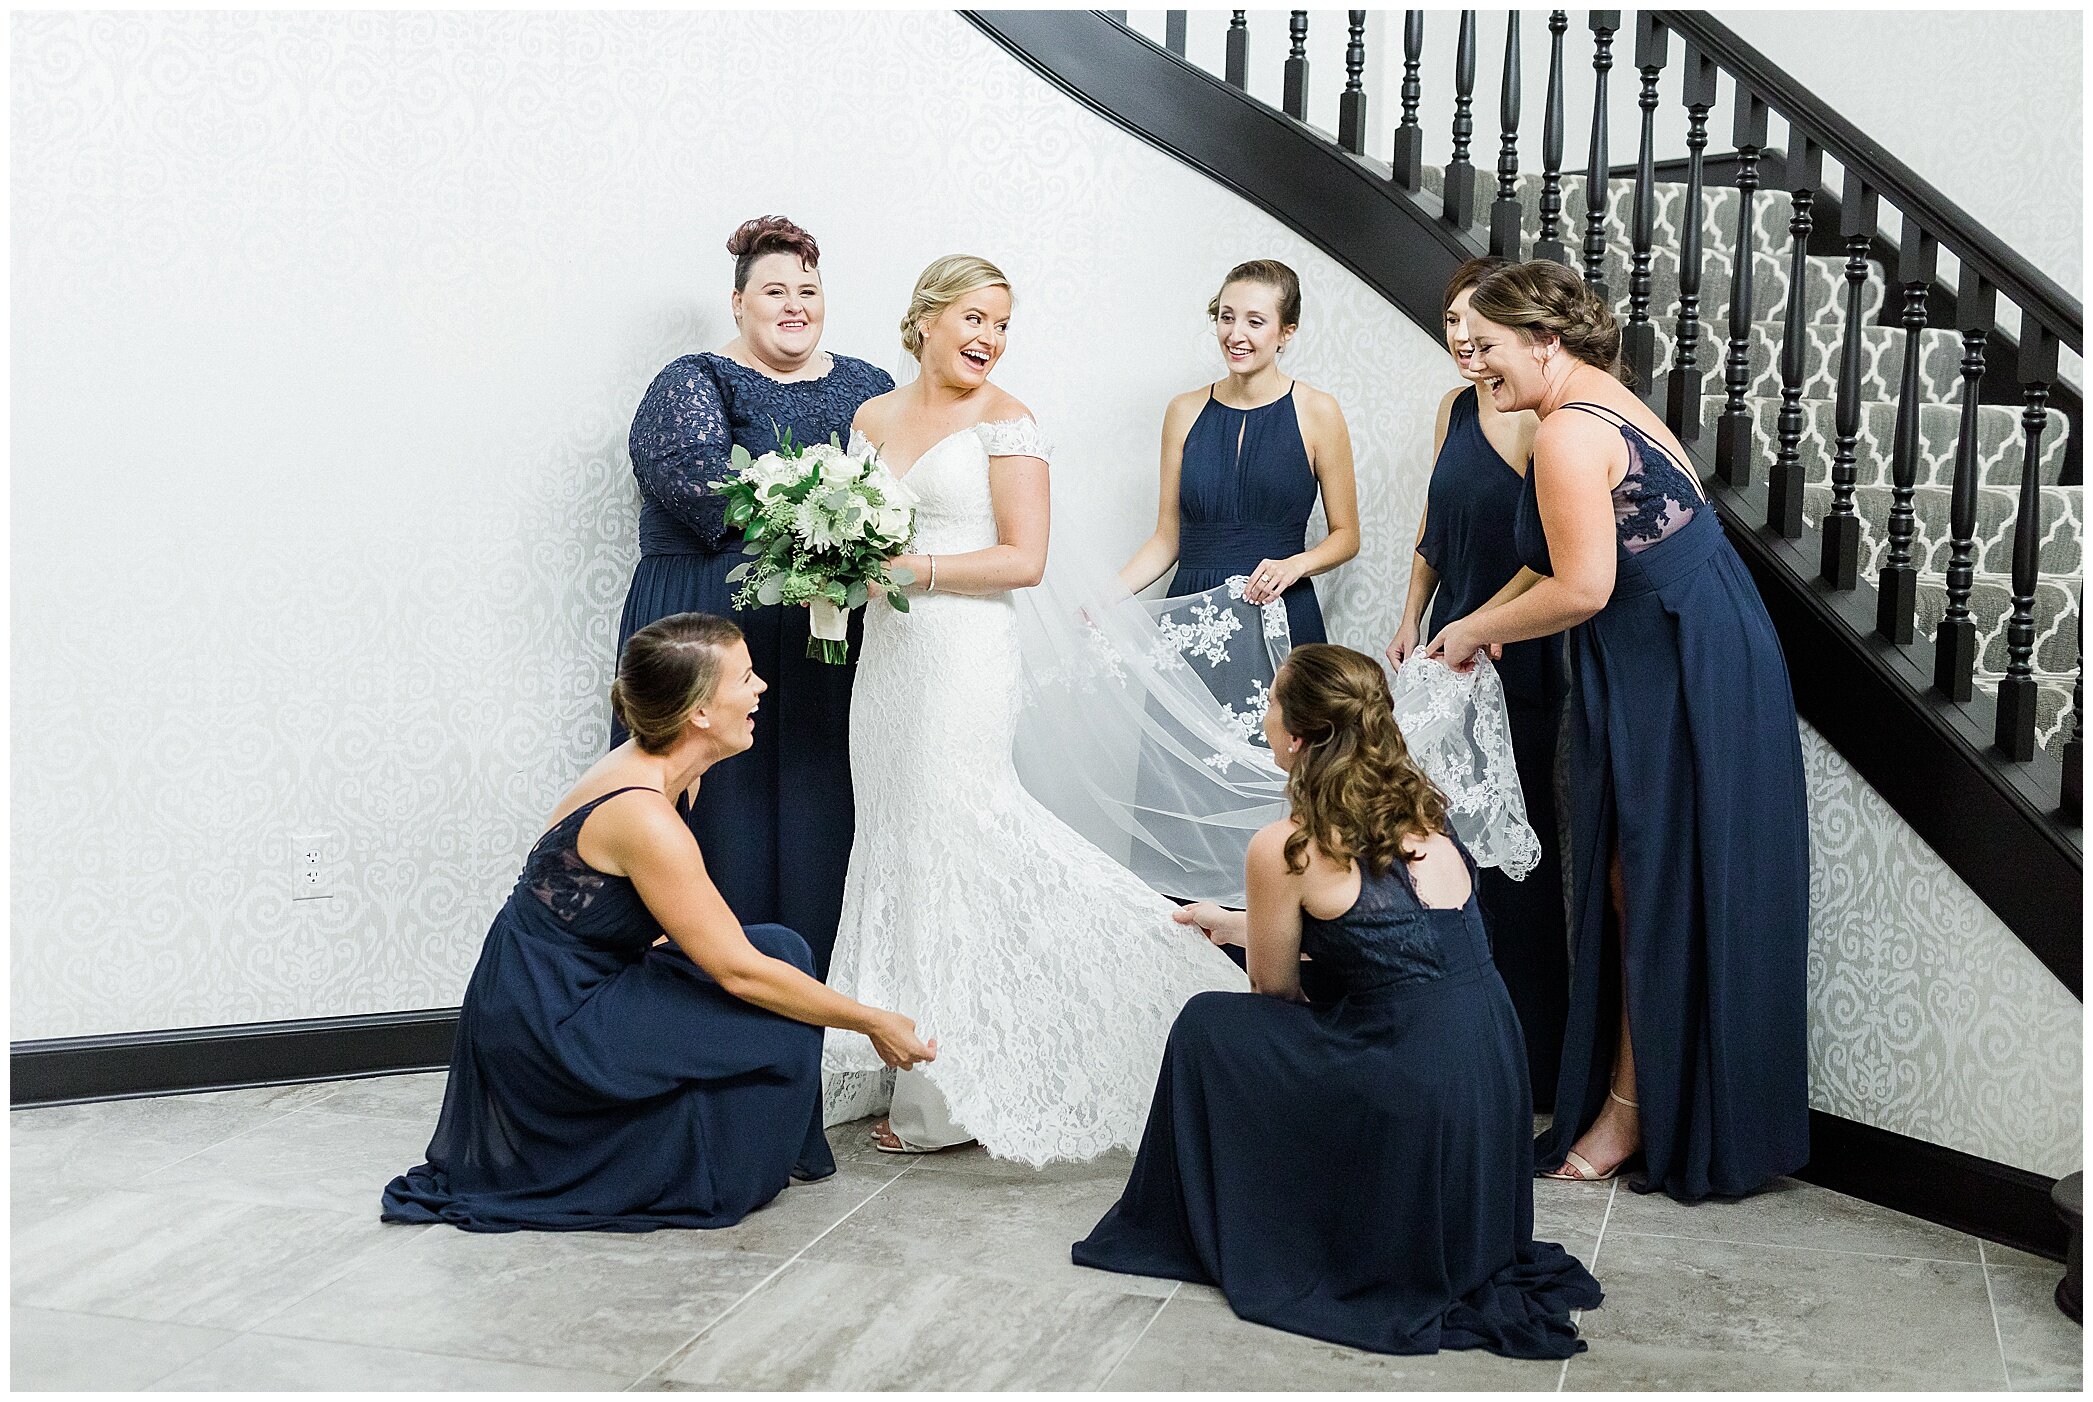 bridesmaids in navy gowns help bride prepare for wedding